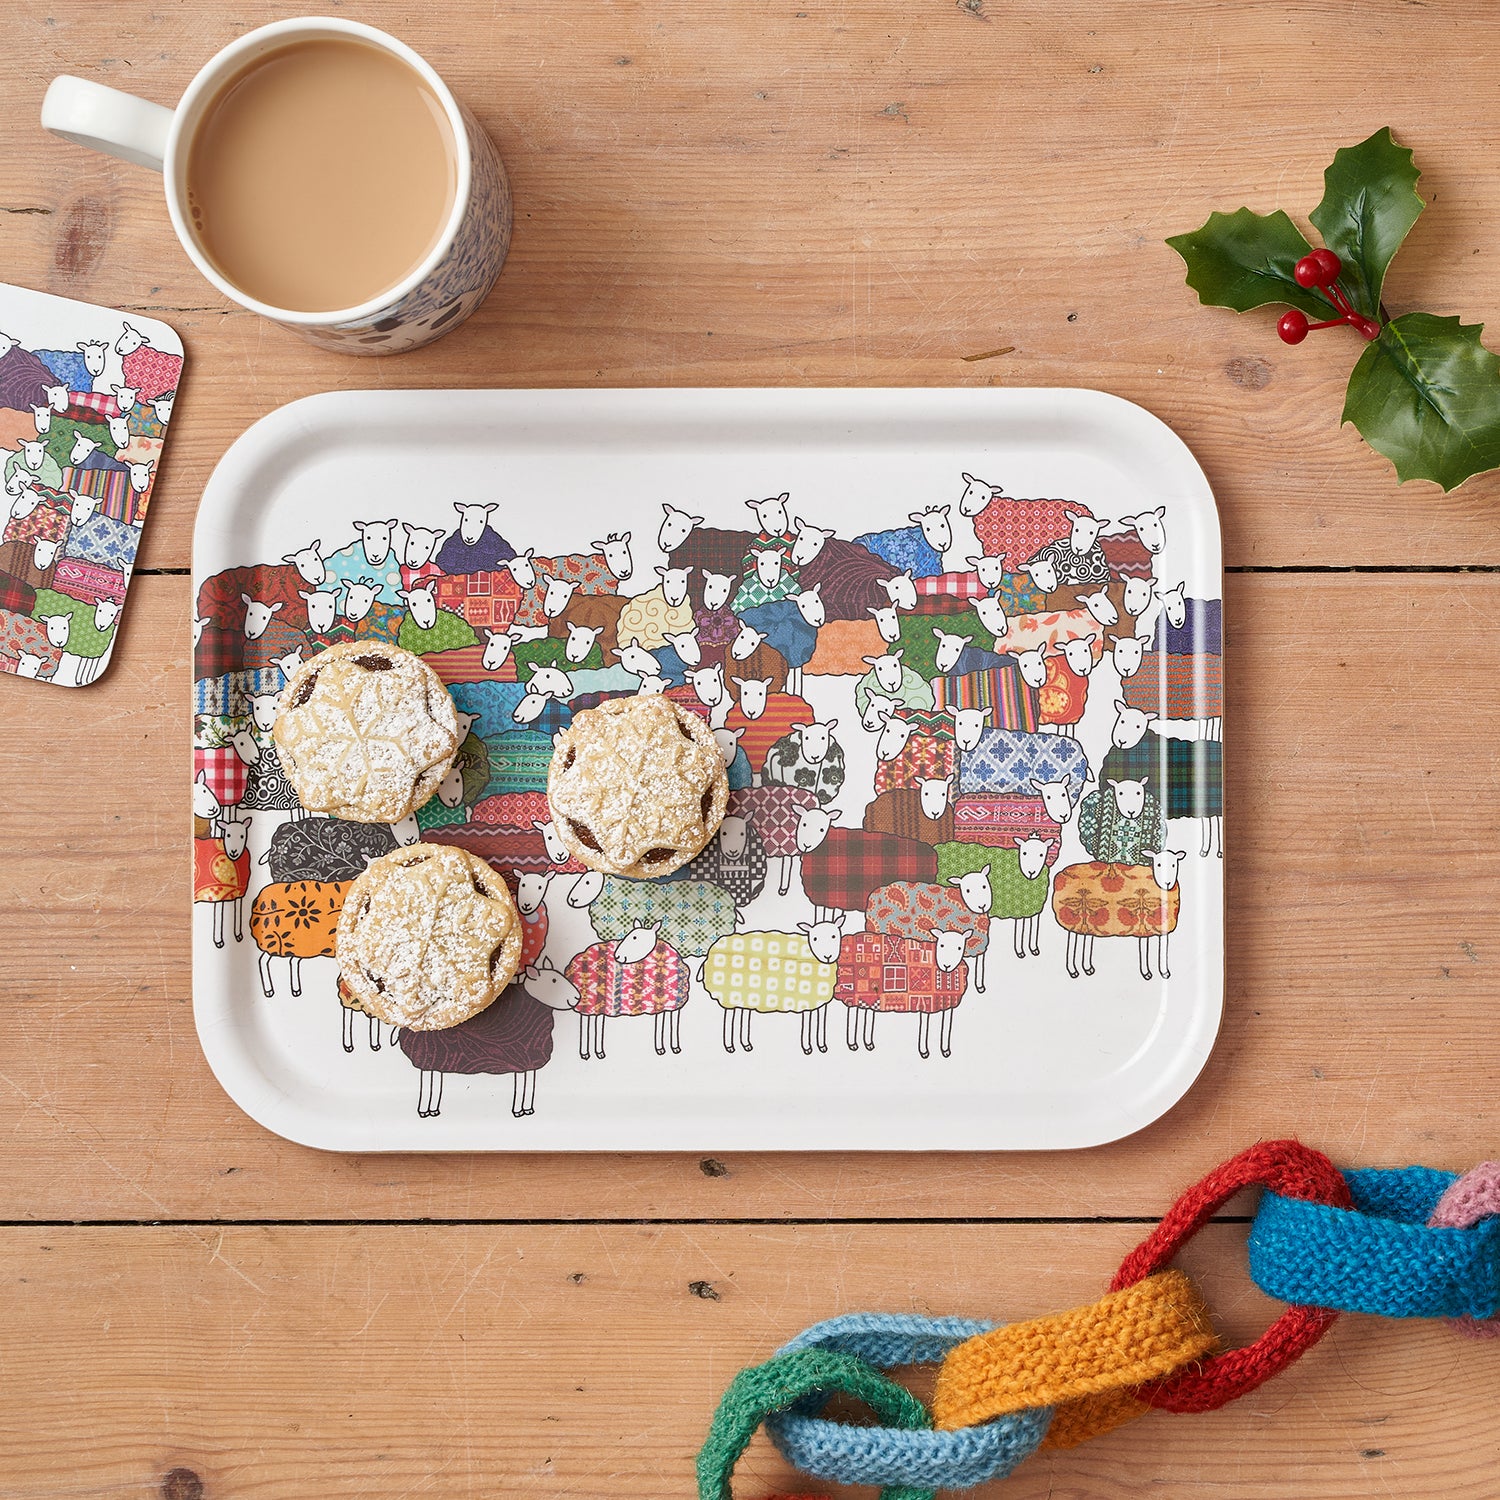 Colourful Sheep Tray, Coaster and Mug by Mary Kilvert, on a Christmas table setting